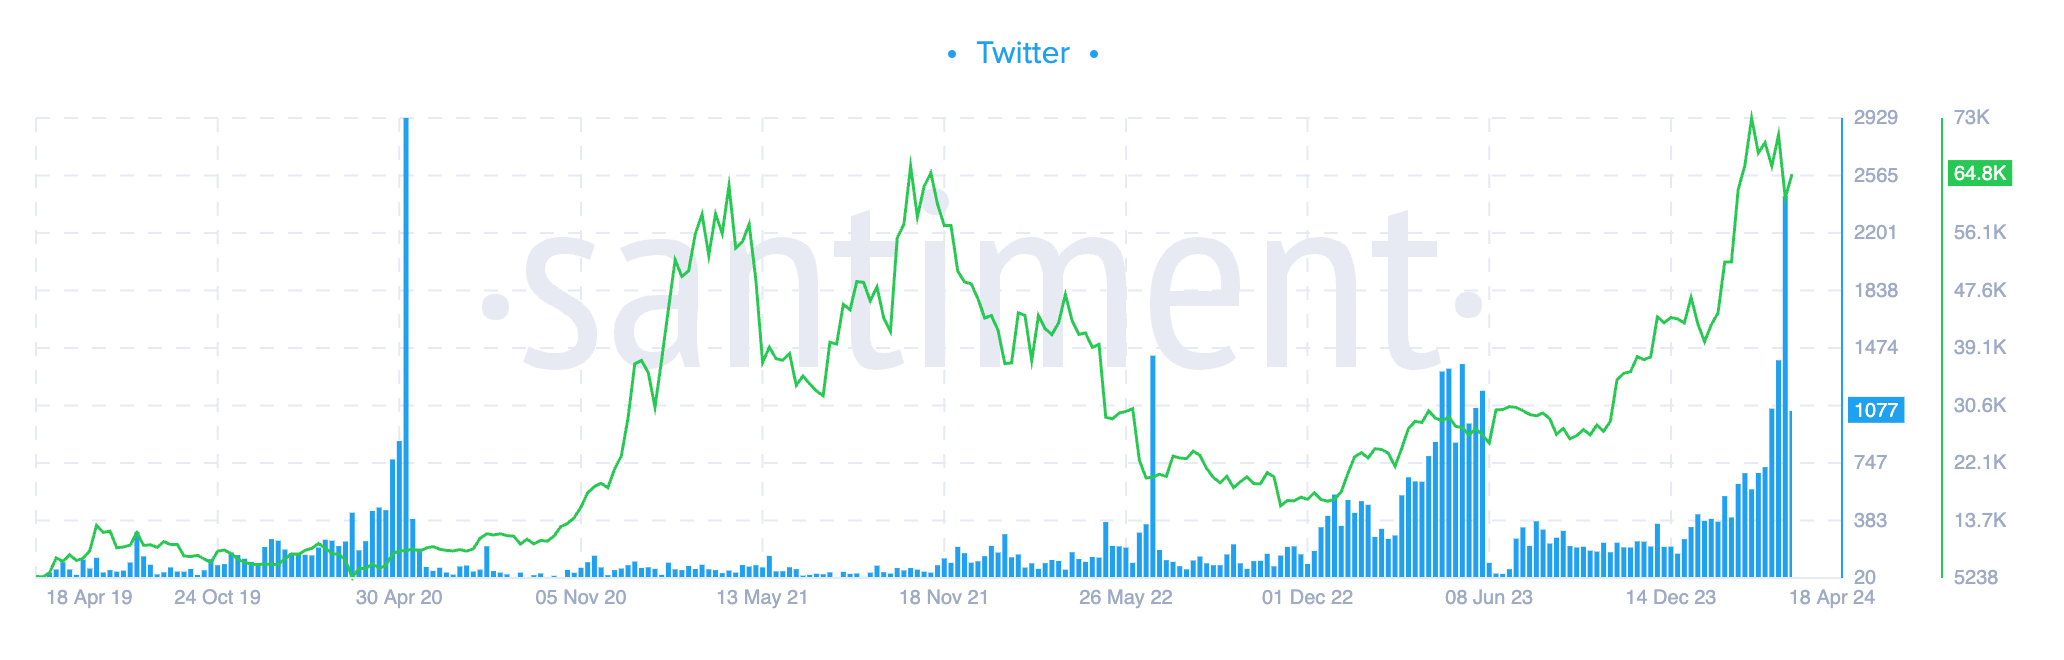 Bitcoin halving Twitter interest (Santiment)